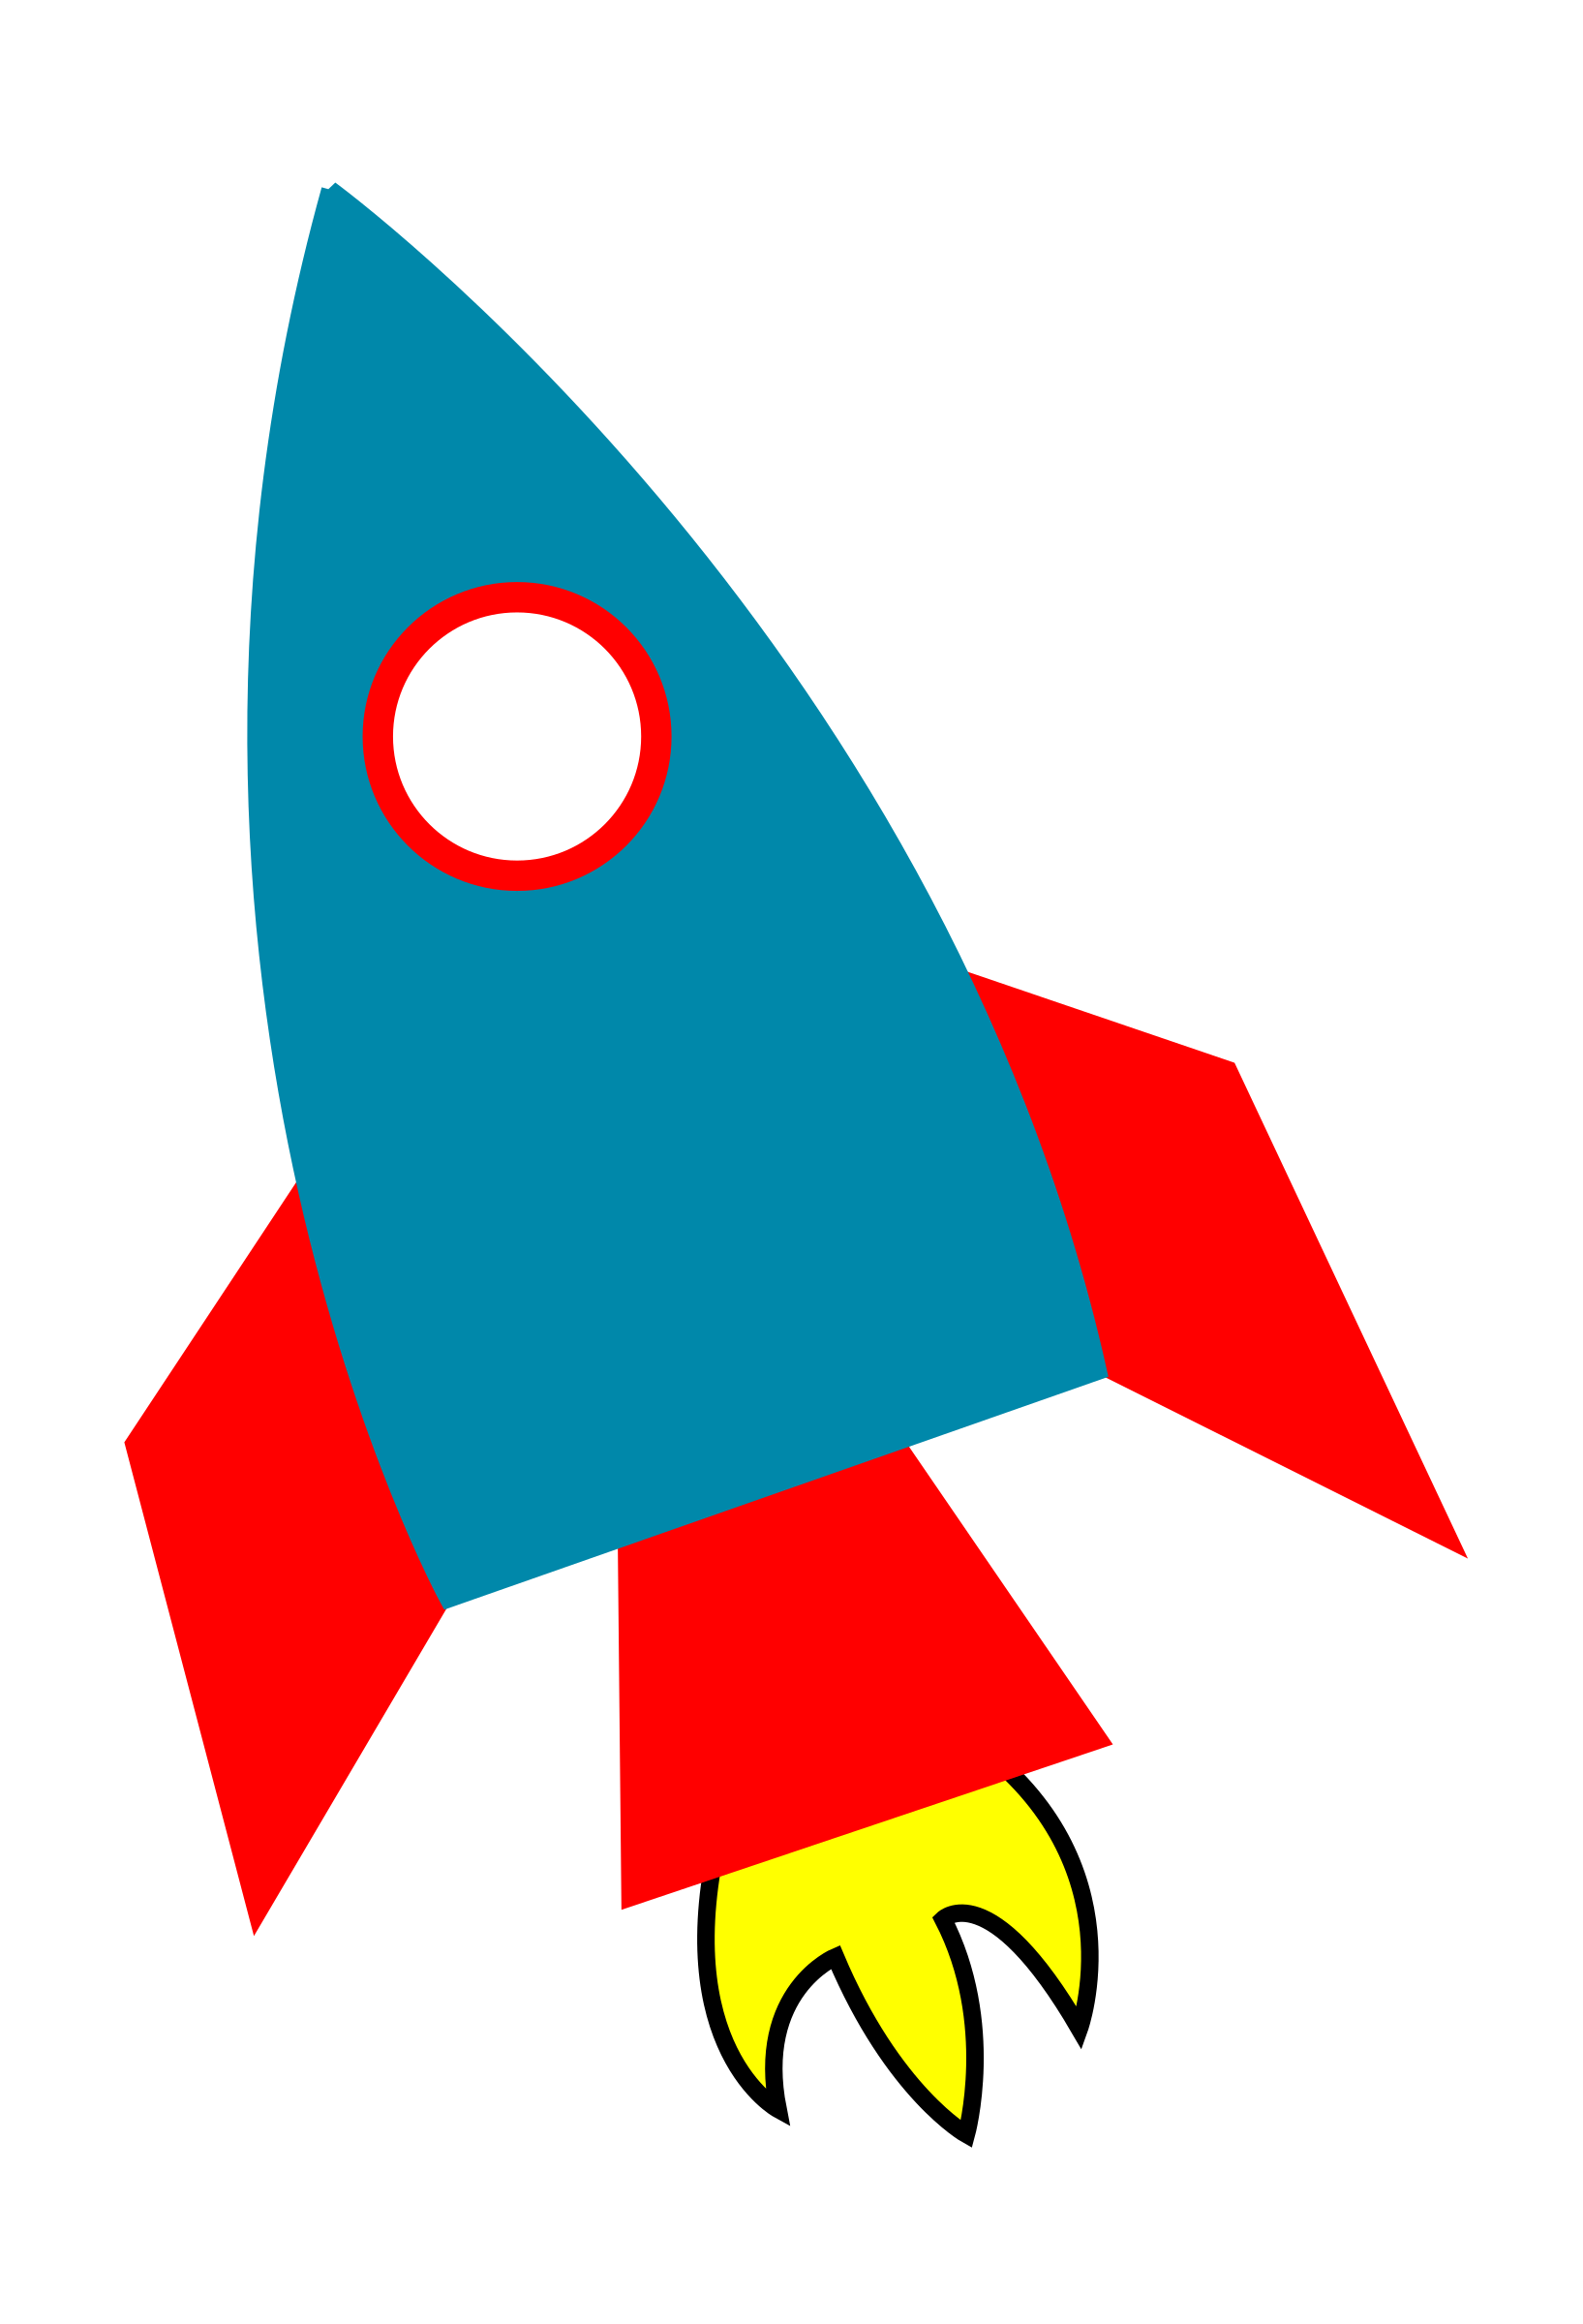 Ракета для детей. Ракета рисунок. Аппликация. Ракета. Ракета картинка для детей. Картинка ракеты для детей цветная